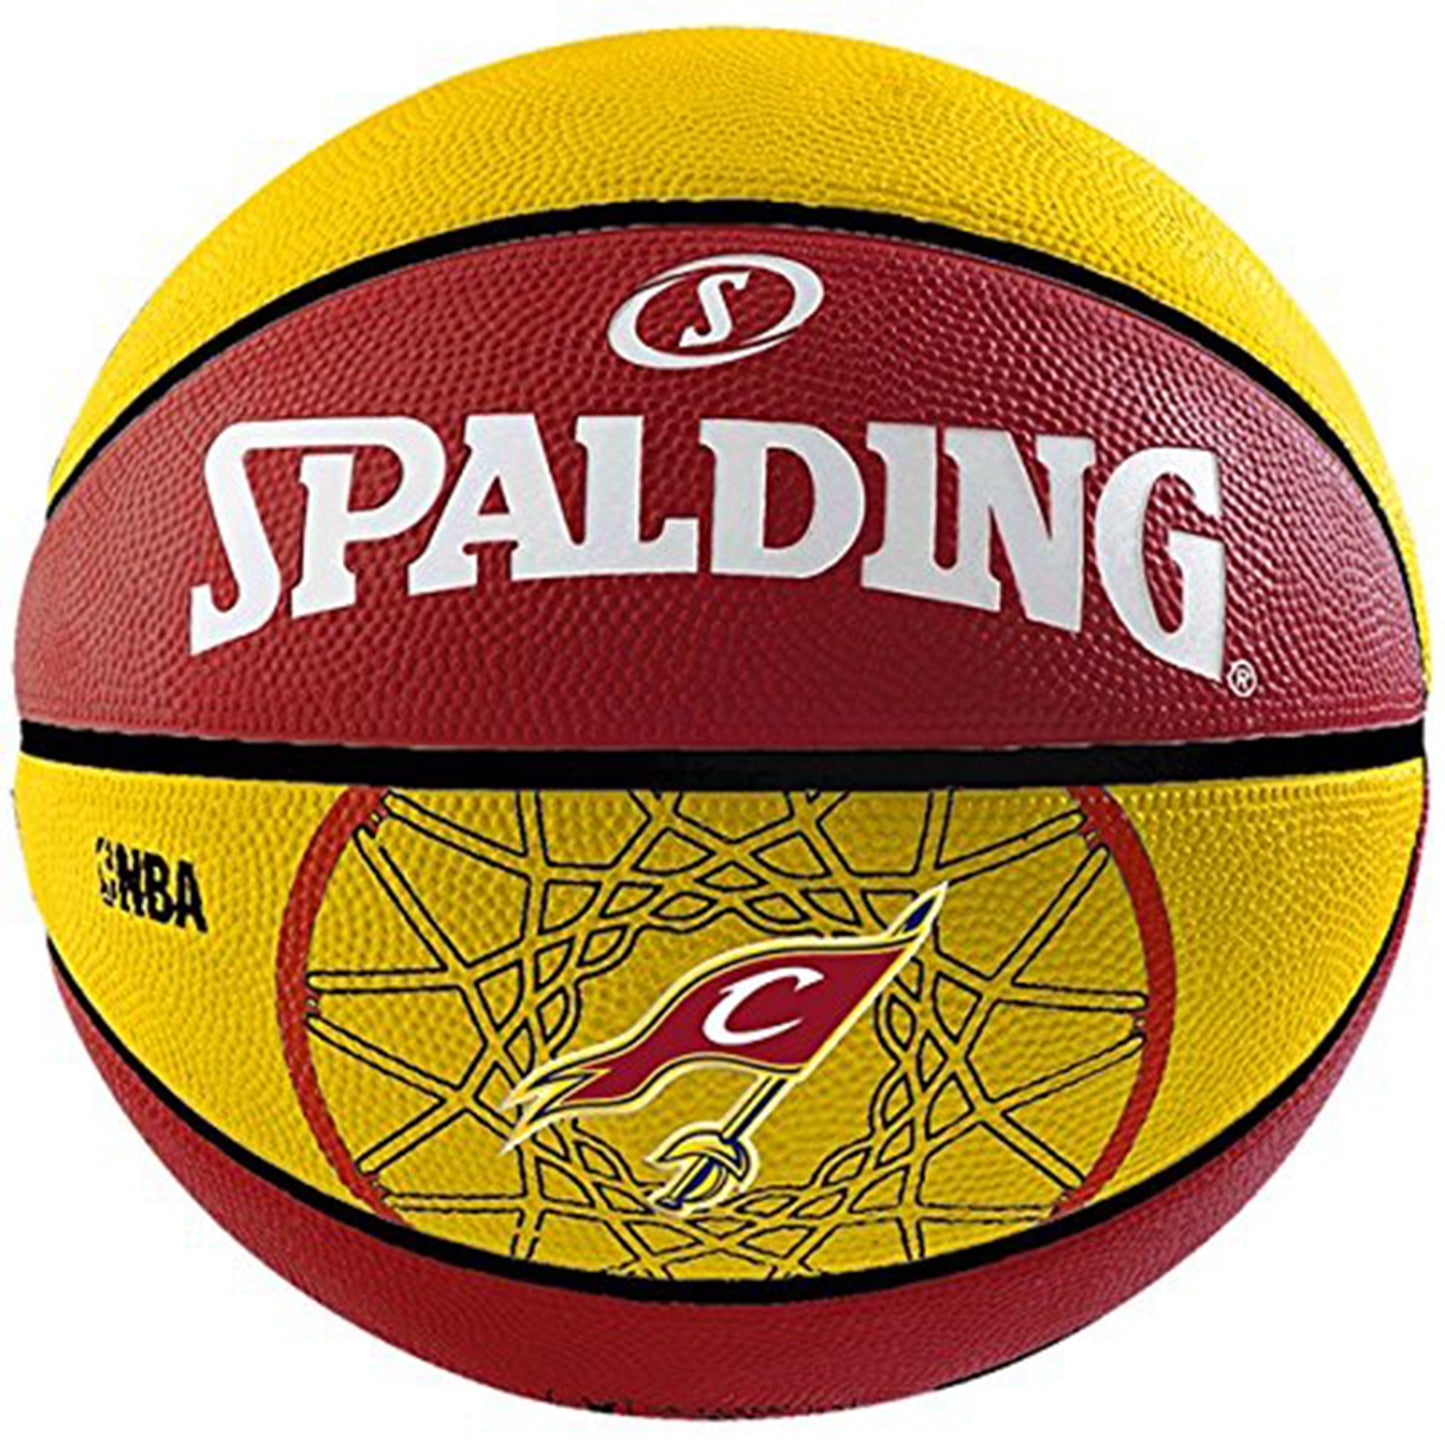 Spalding Team Cavaliers Basketball - Size: 7, Diameter: 24.25 cm Red/Yellow - Best Price online Prokicksports.com